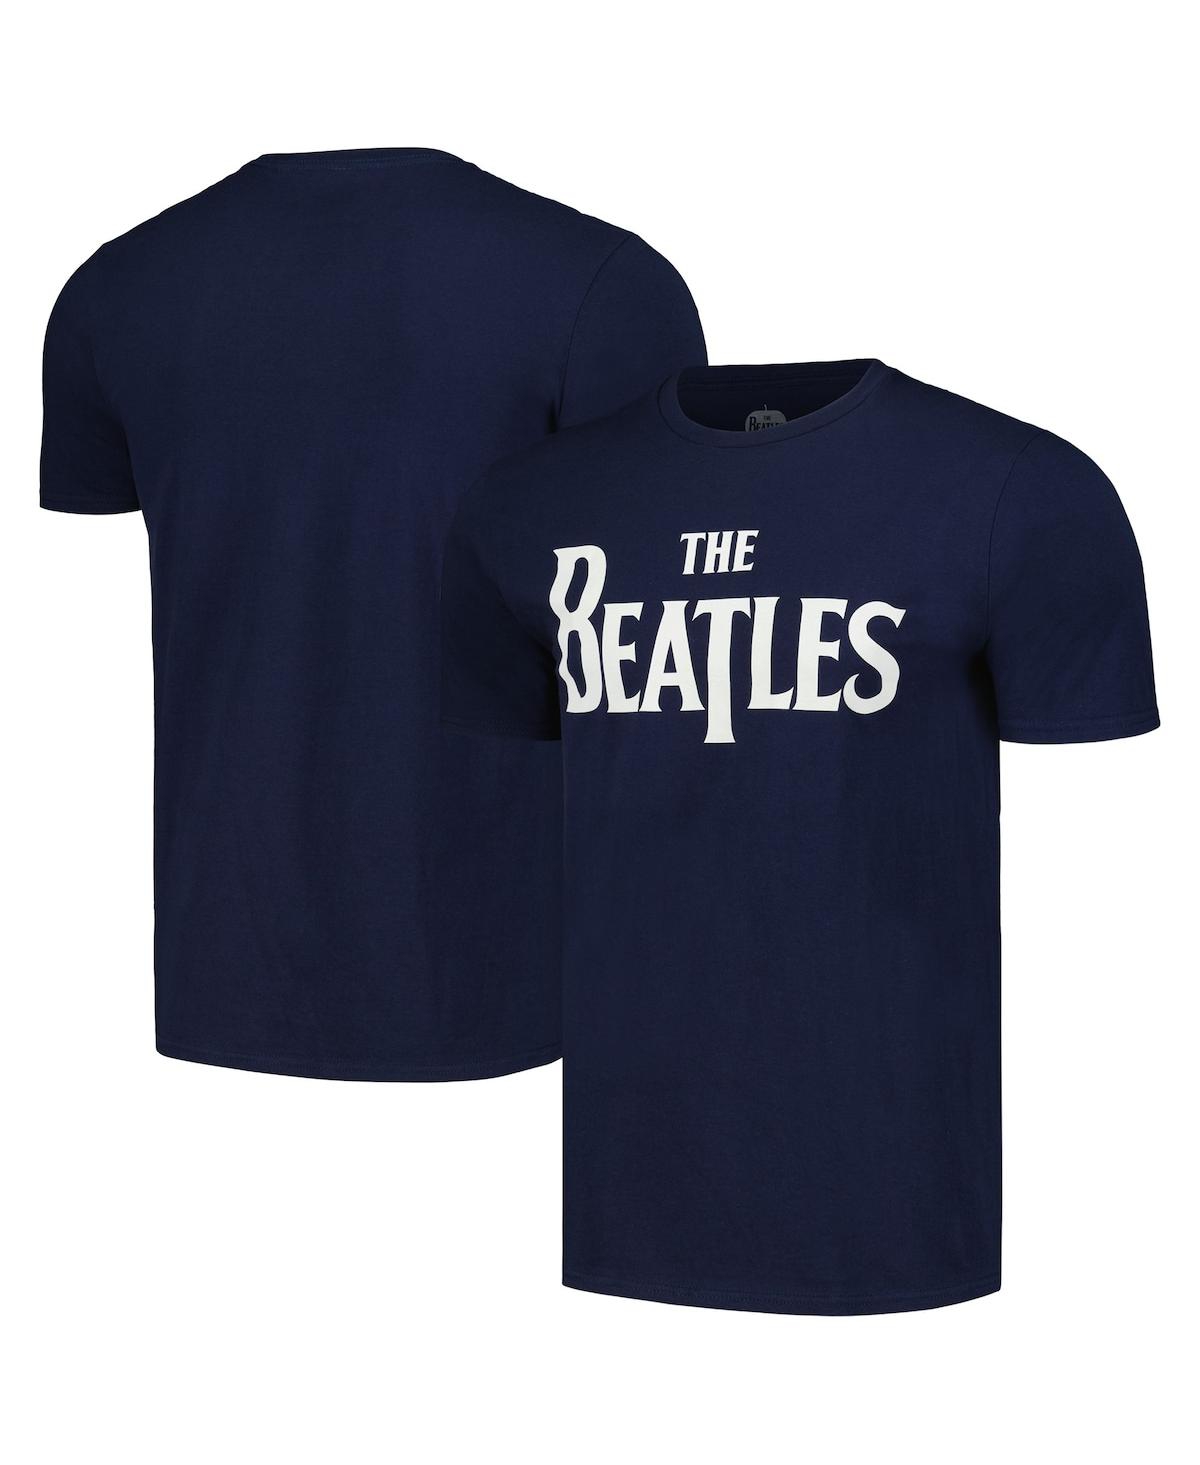 Men's and Women's Navy The Beatles Logo T-shirt - Navy